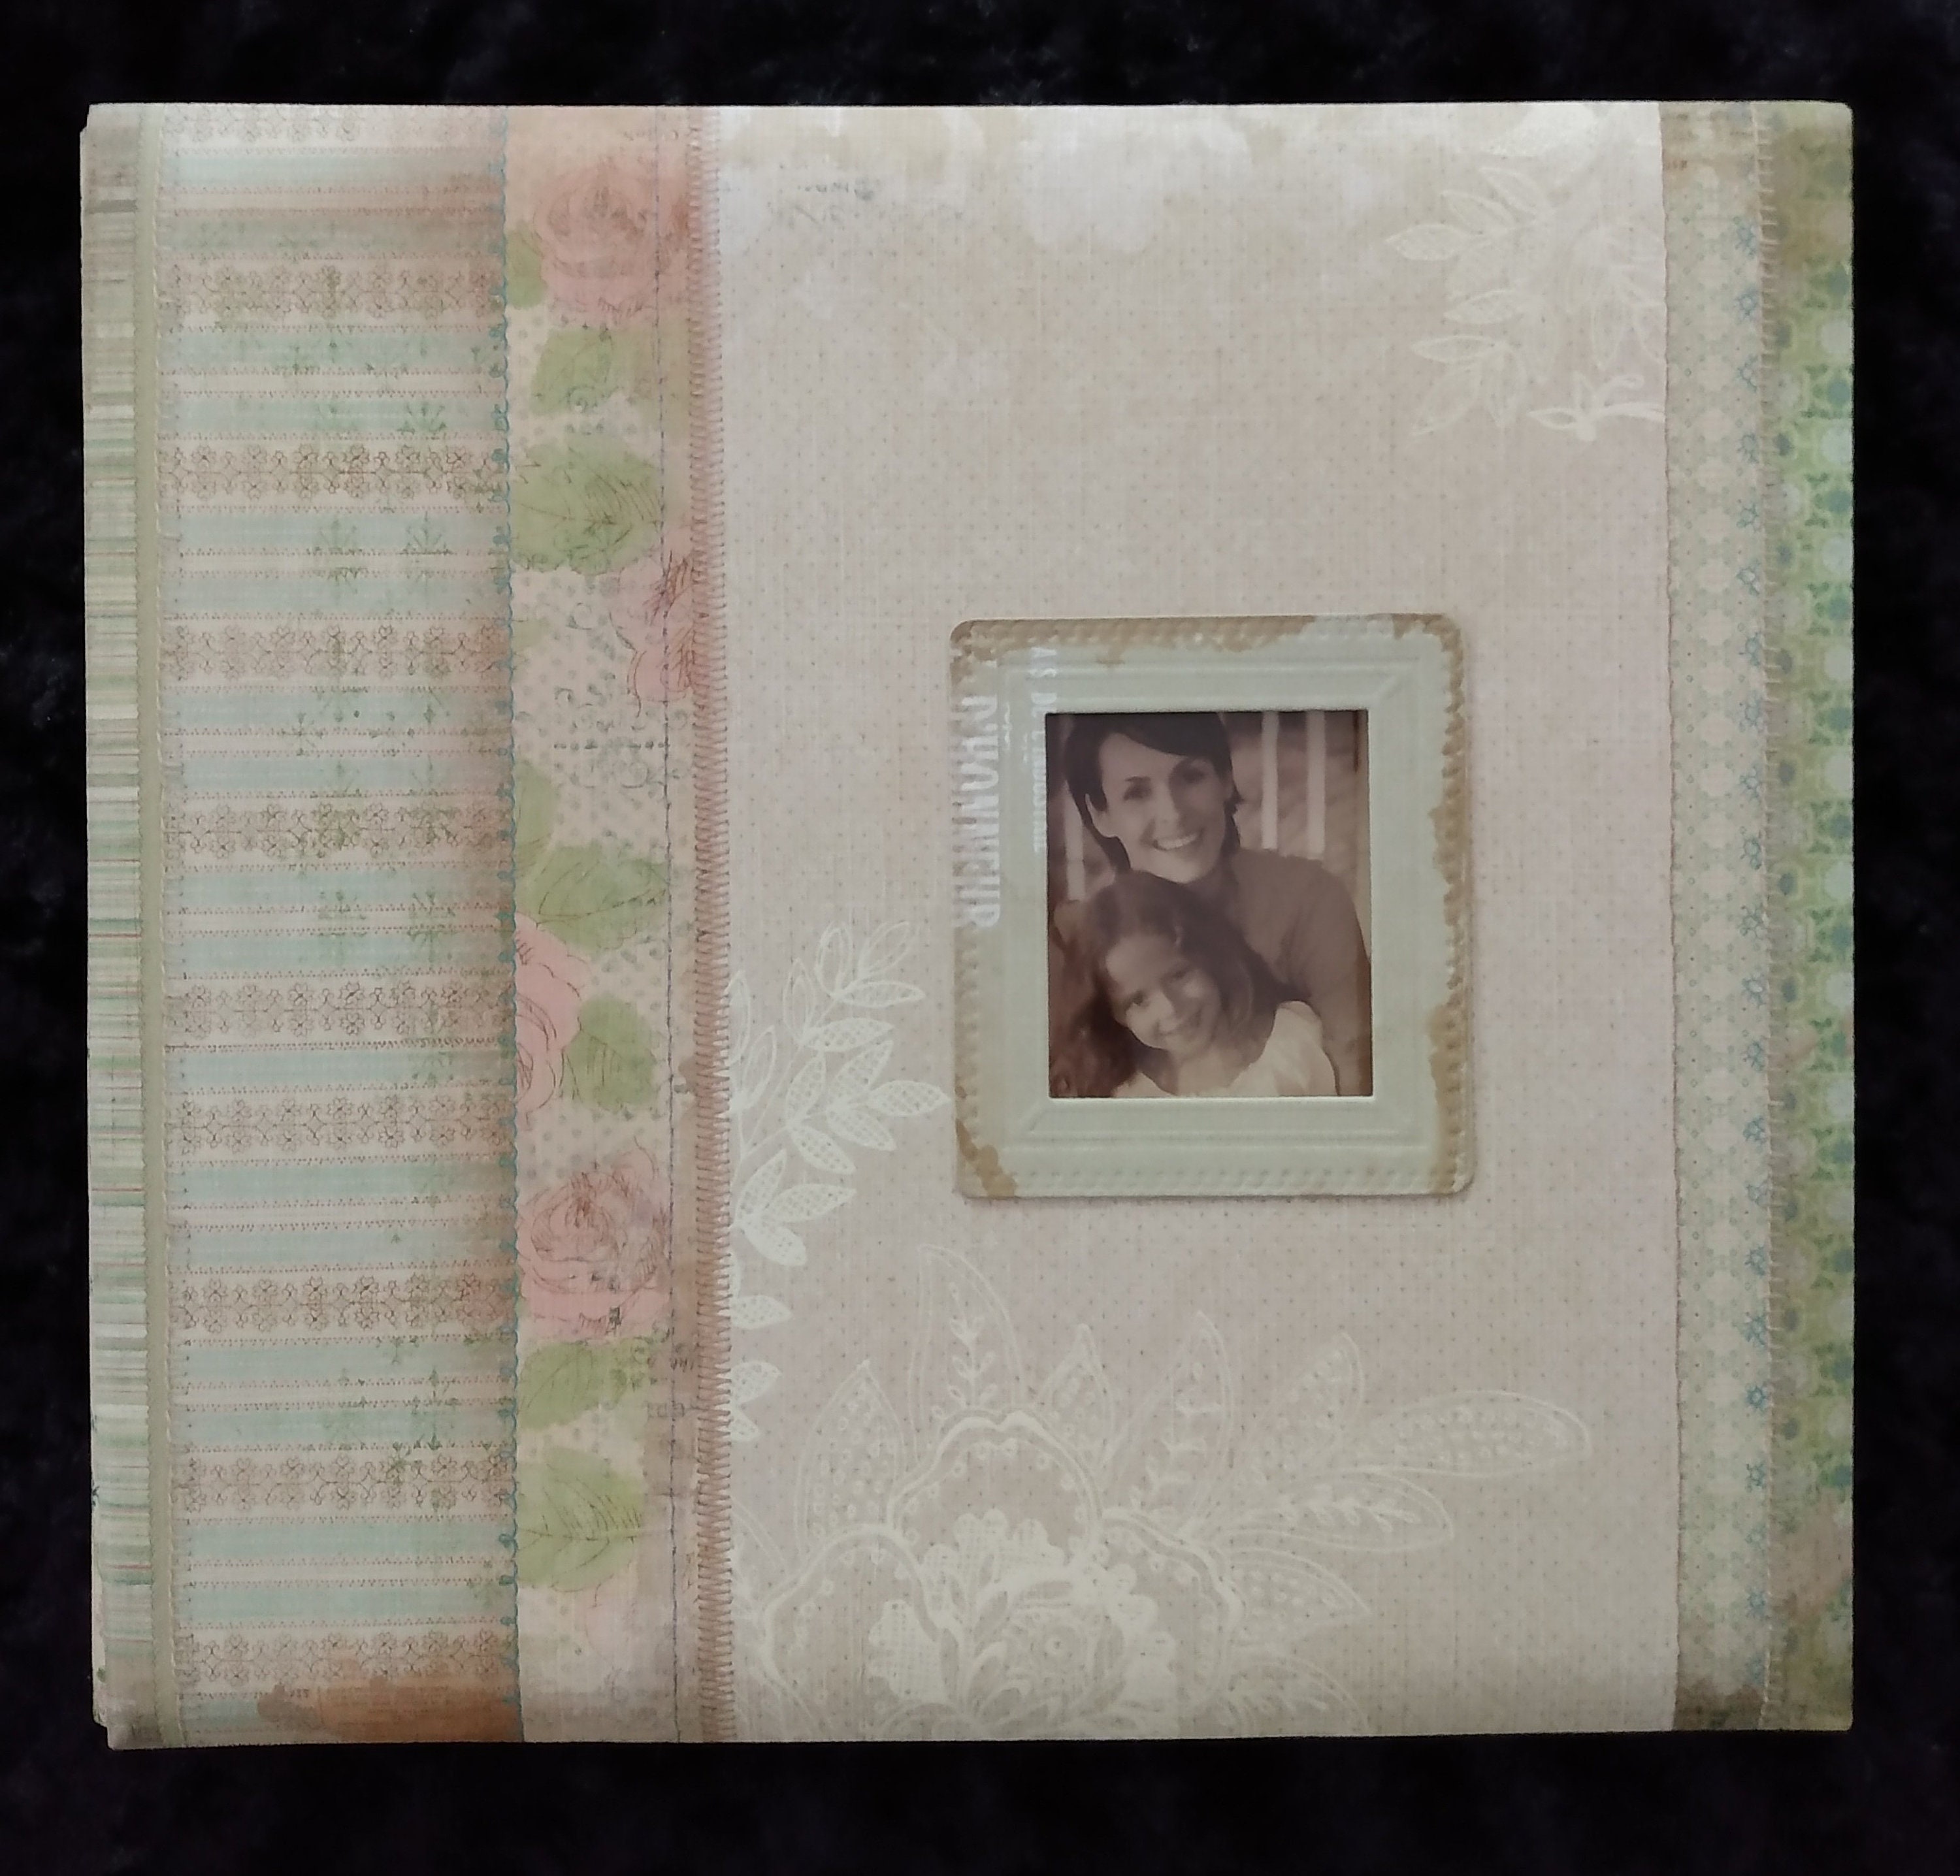 K&Company Scrapbook Album 12x12 Foil Dot Hello Memories - 643077735675